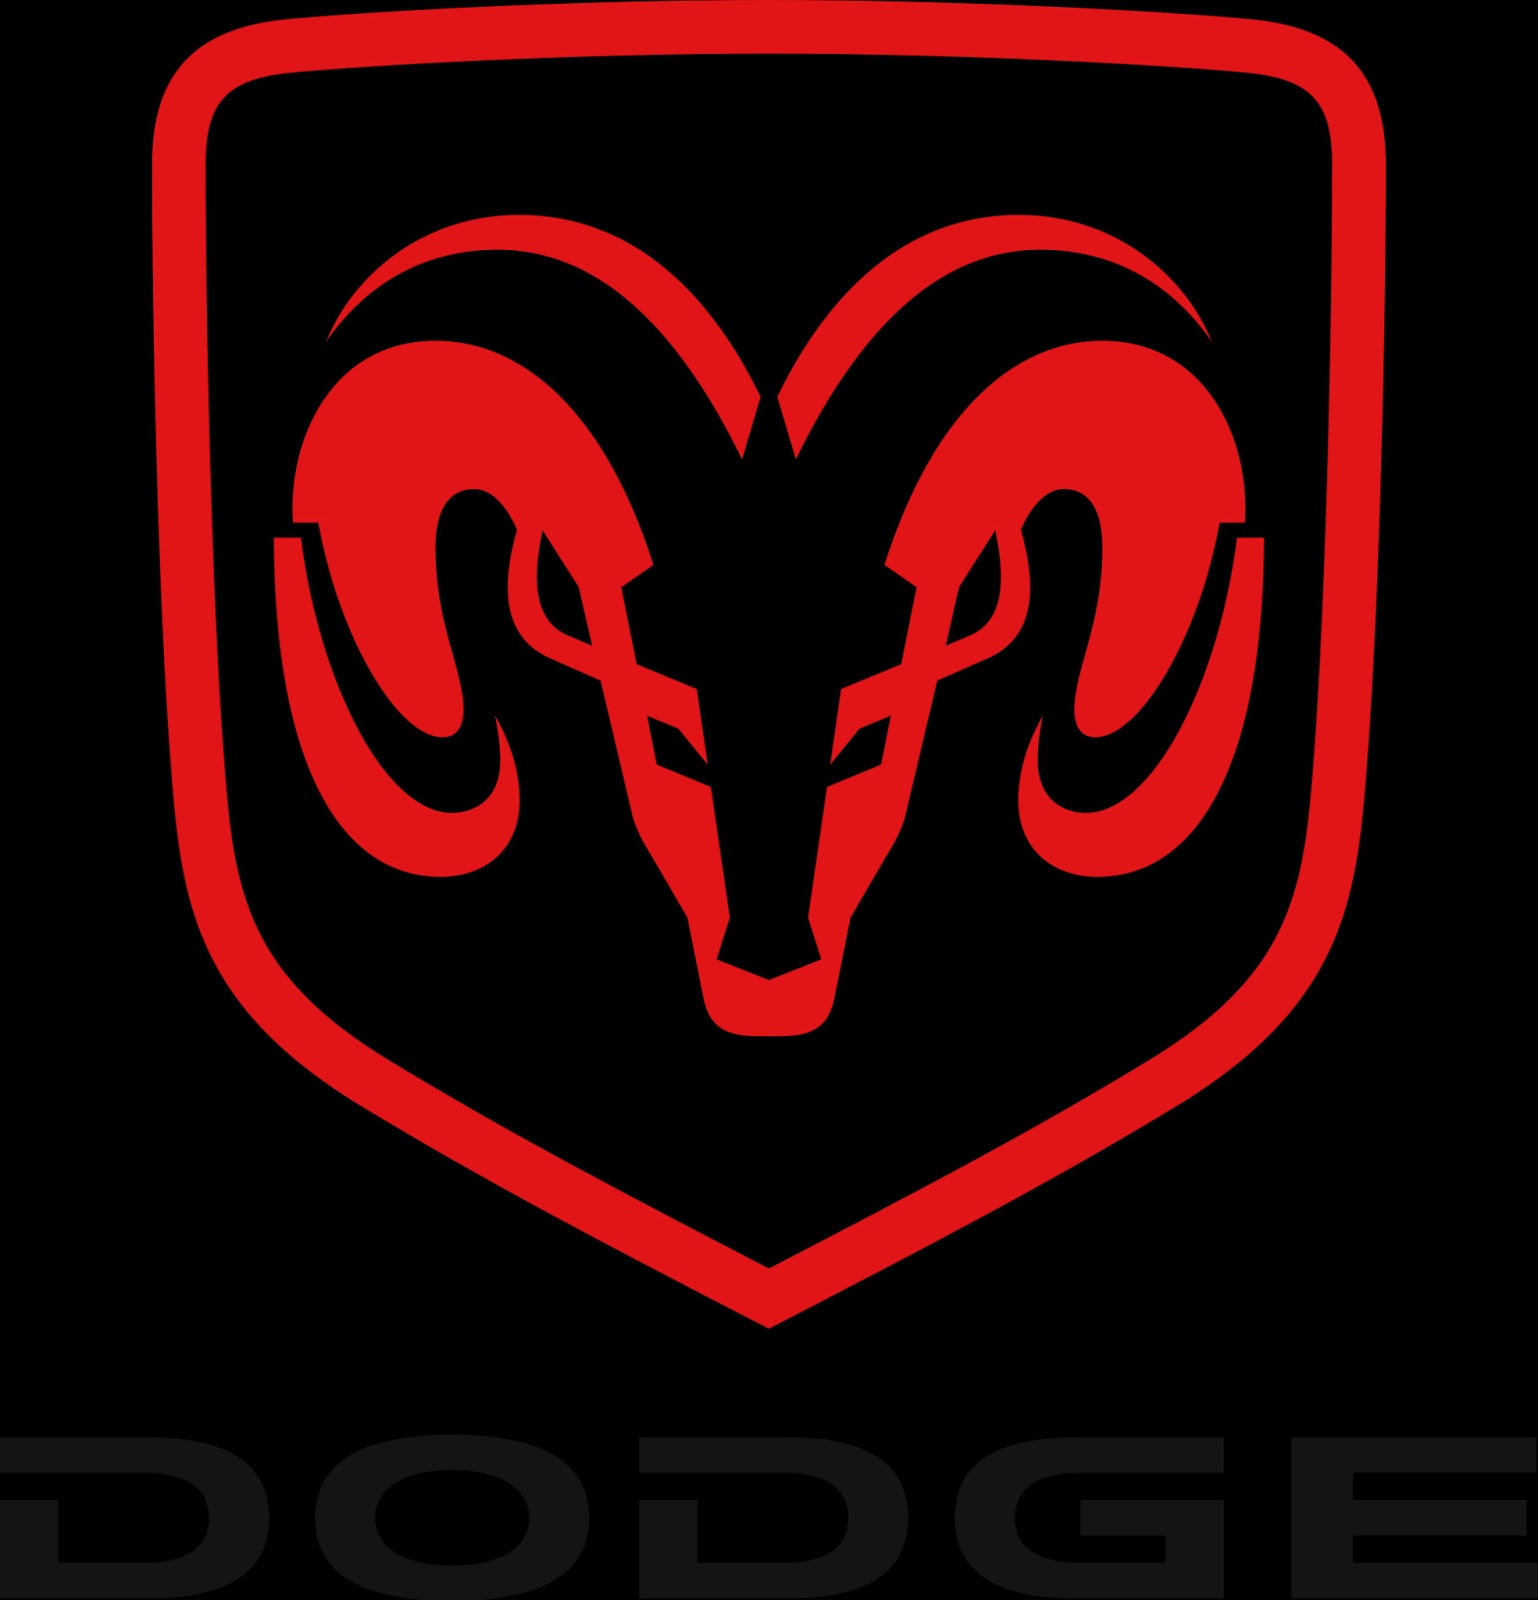  company dodge logo wallpaper dodge logo dodge ram logo new dodge logo